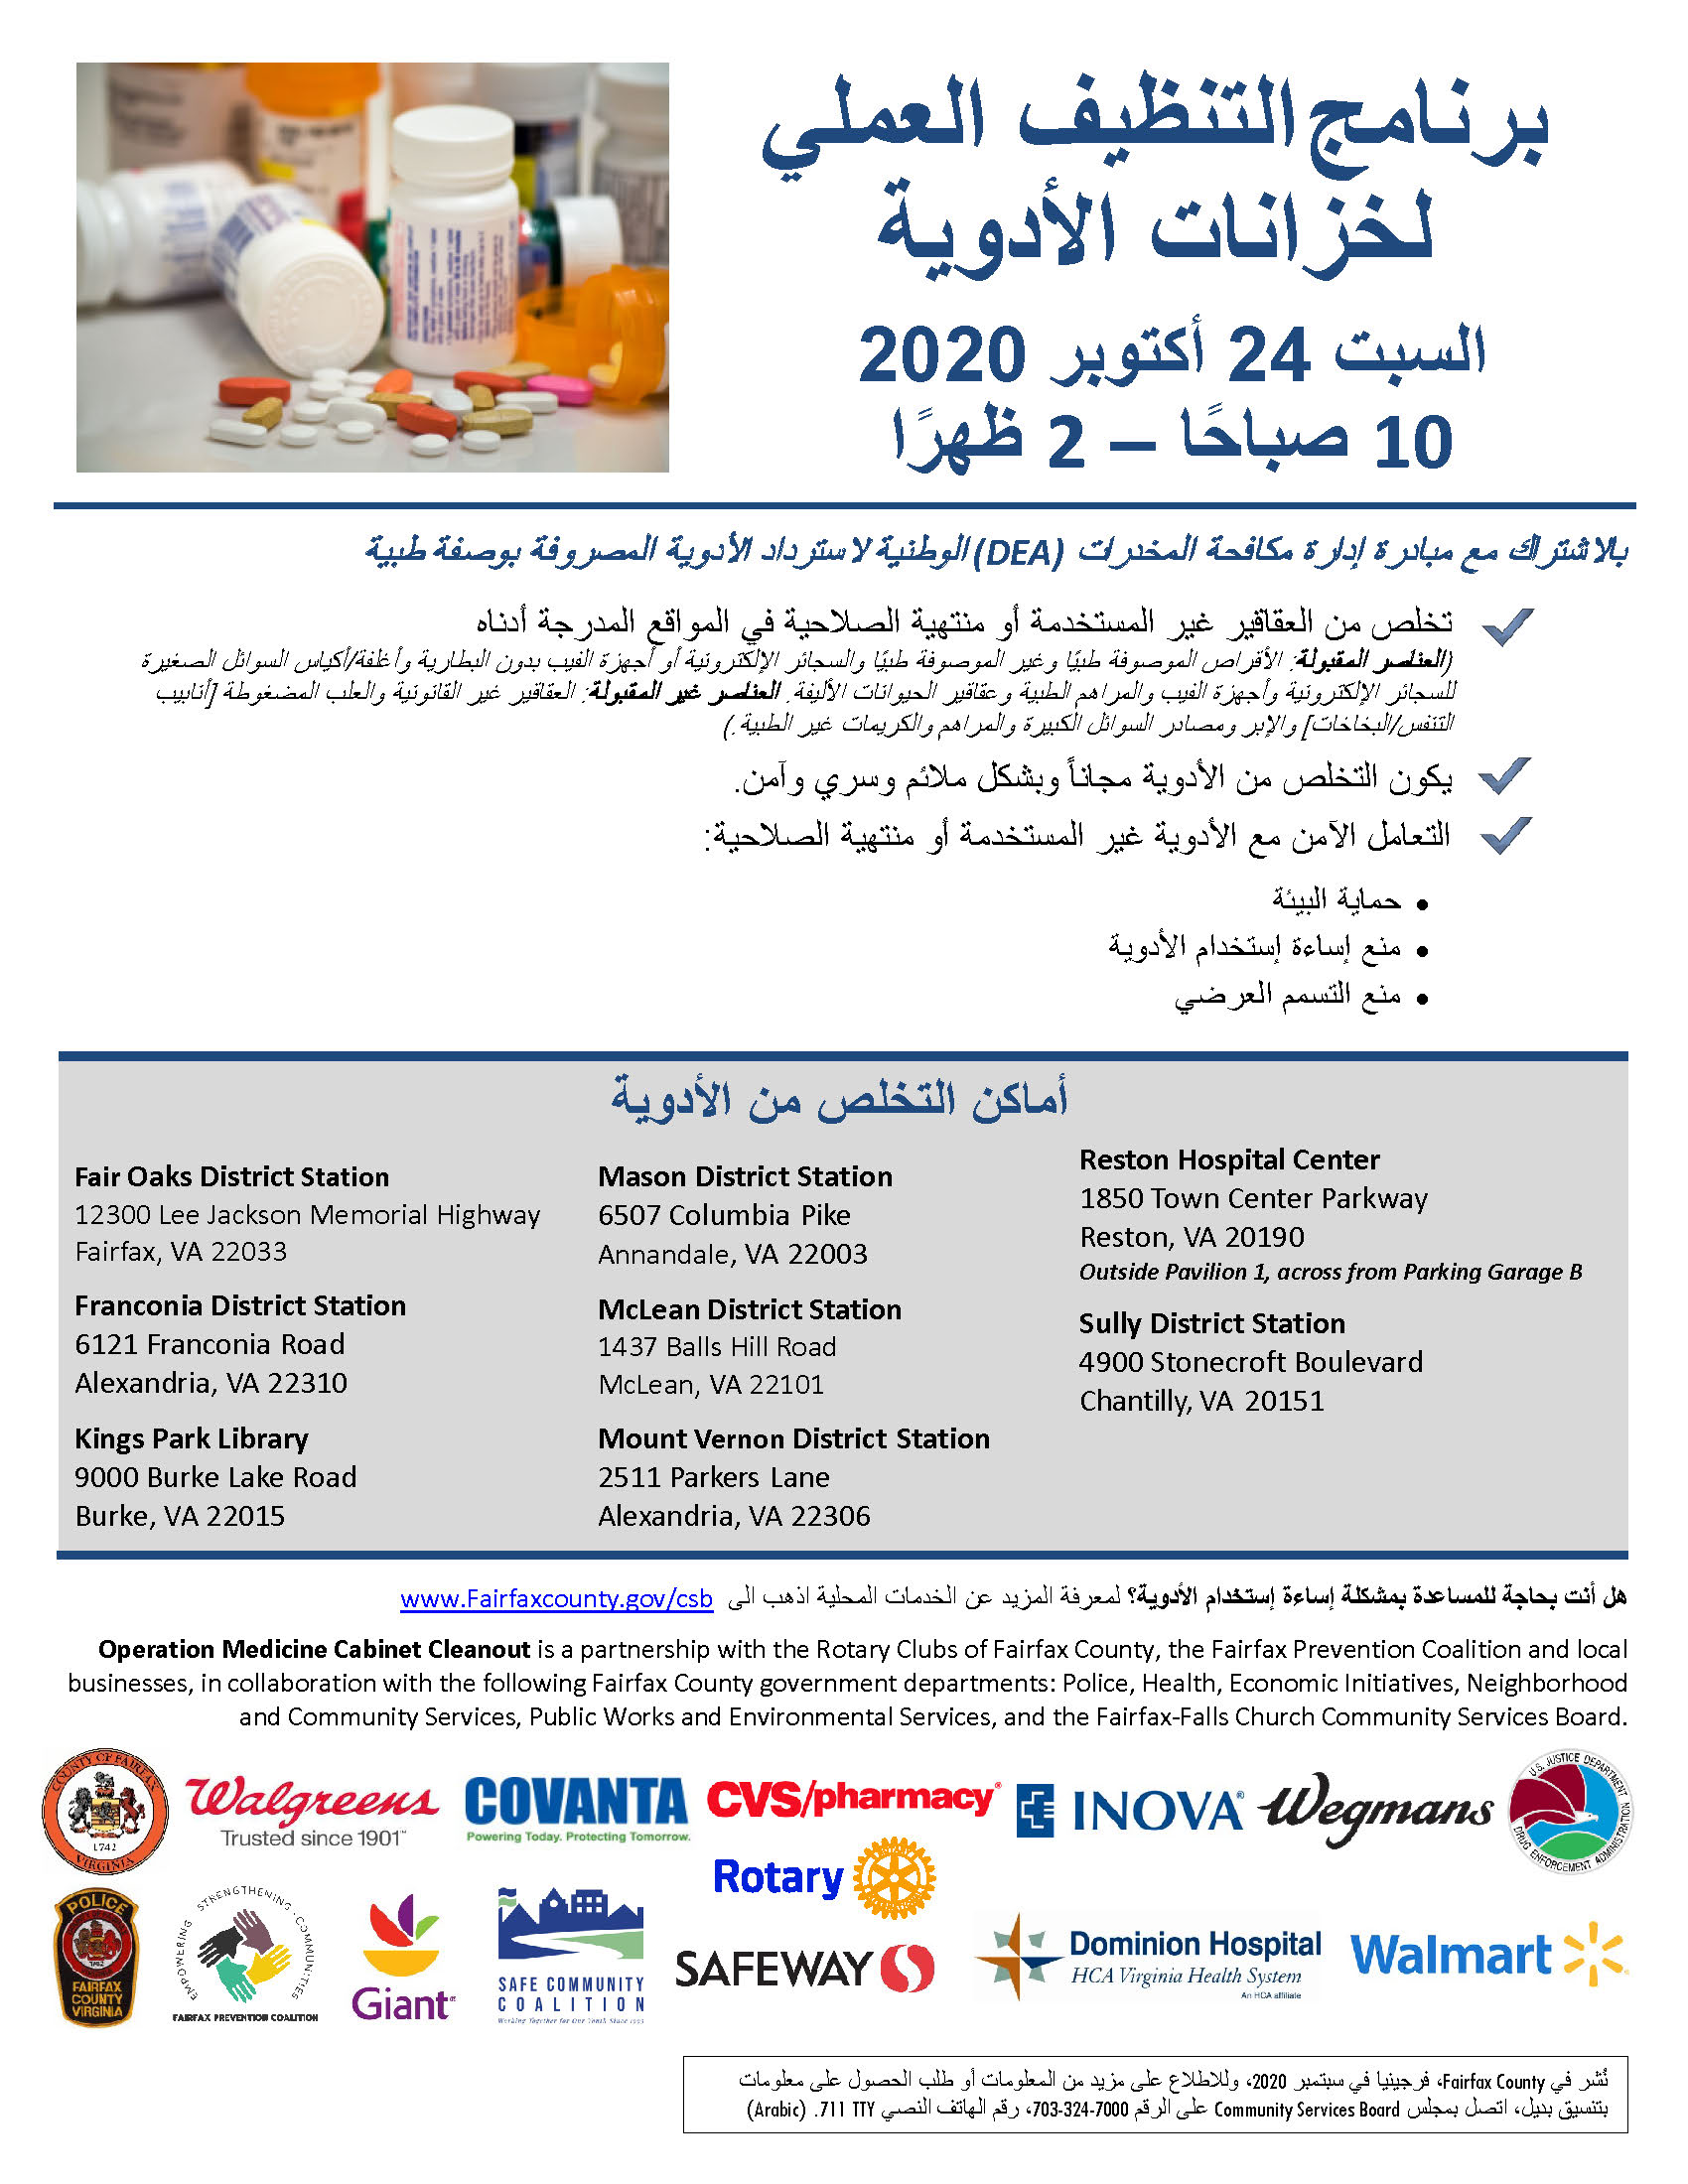 Operation Medicine Cabinet Cleanout flyer - Arabic